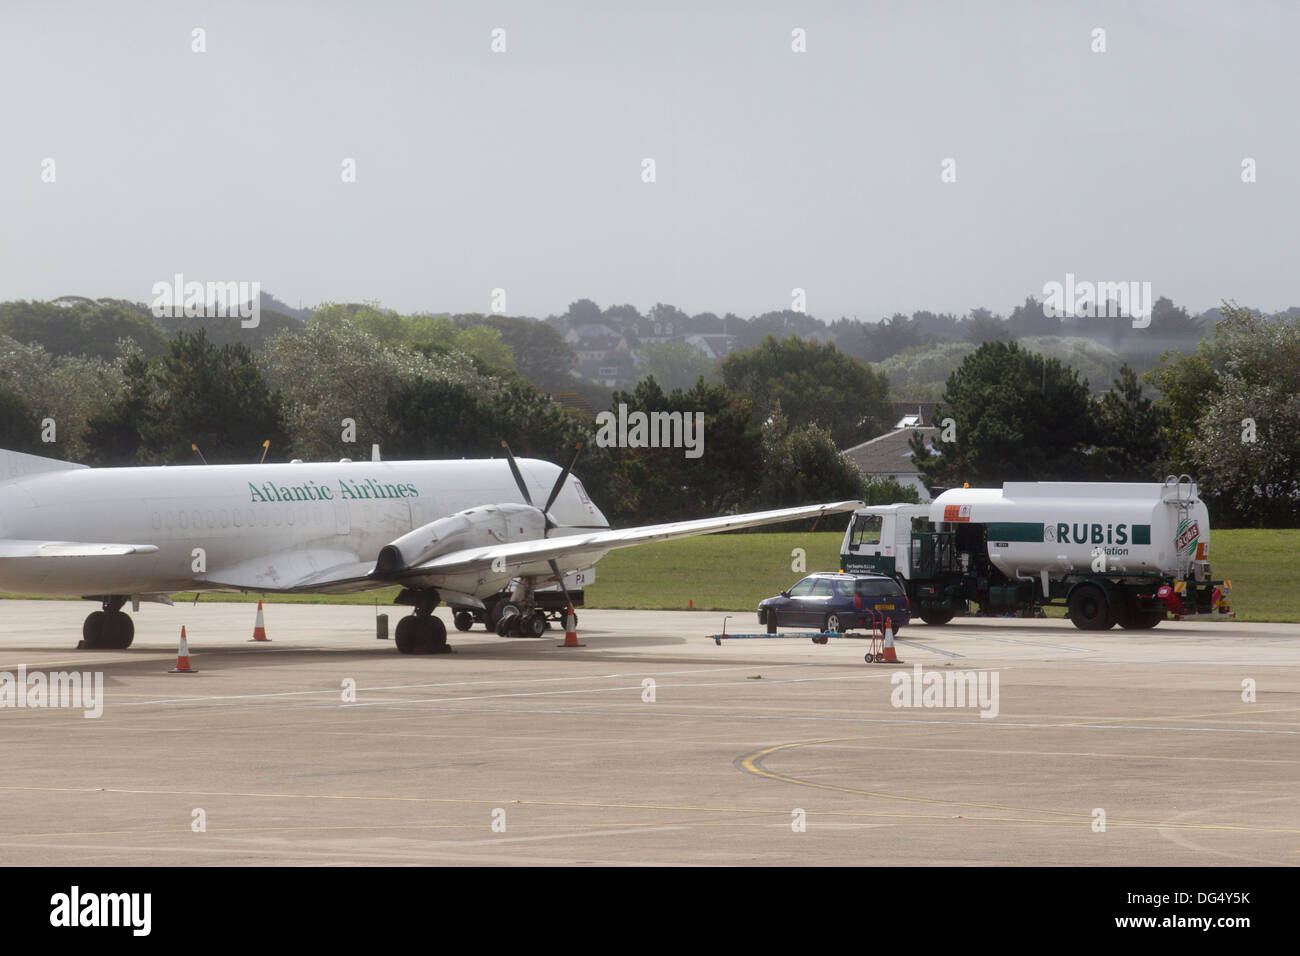 Atlantic Airlines prop & Rubis aviazione autocisterna di carburante Foto Stock